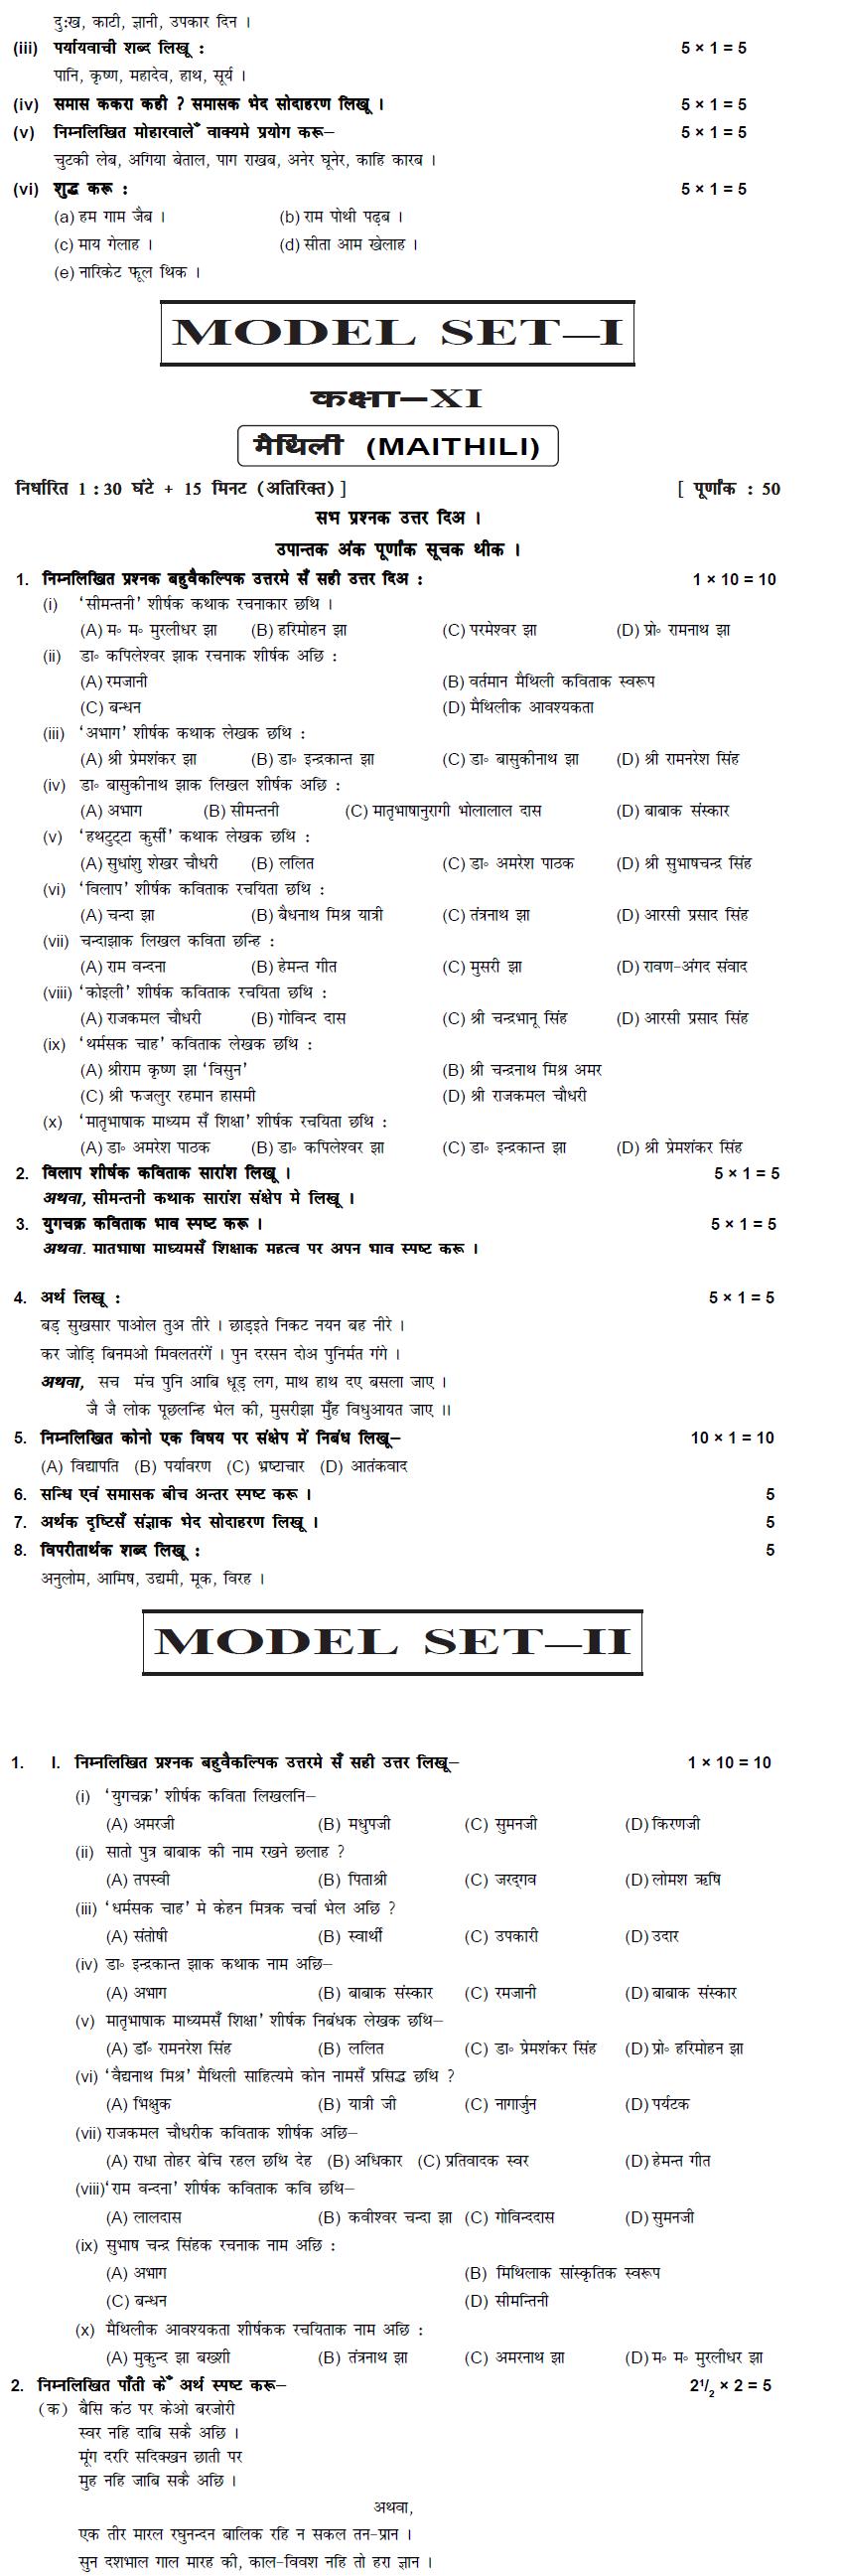 Bihar Board Class XI Humanities Model Question Papers - Maithilli